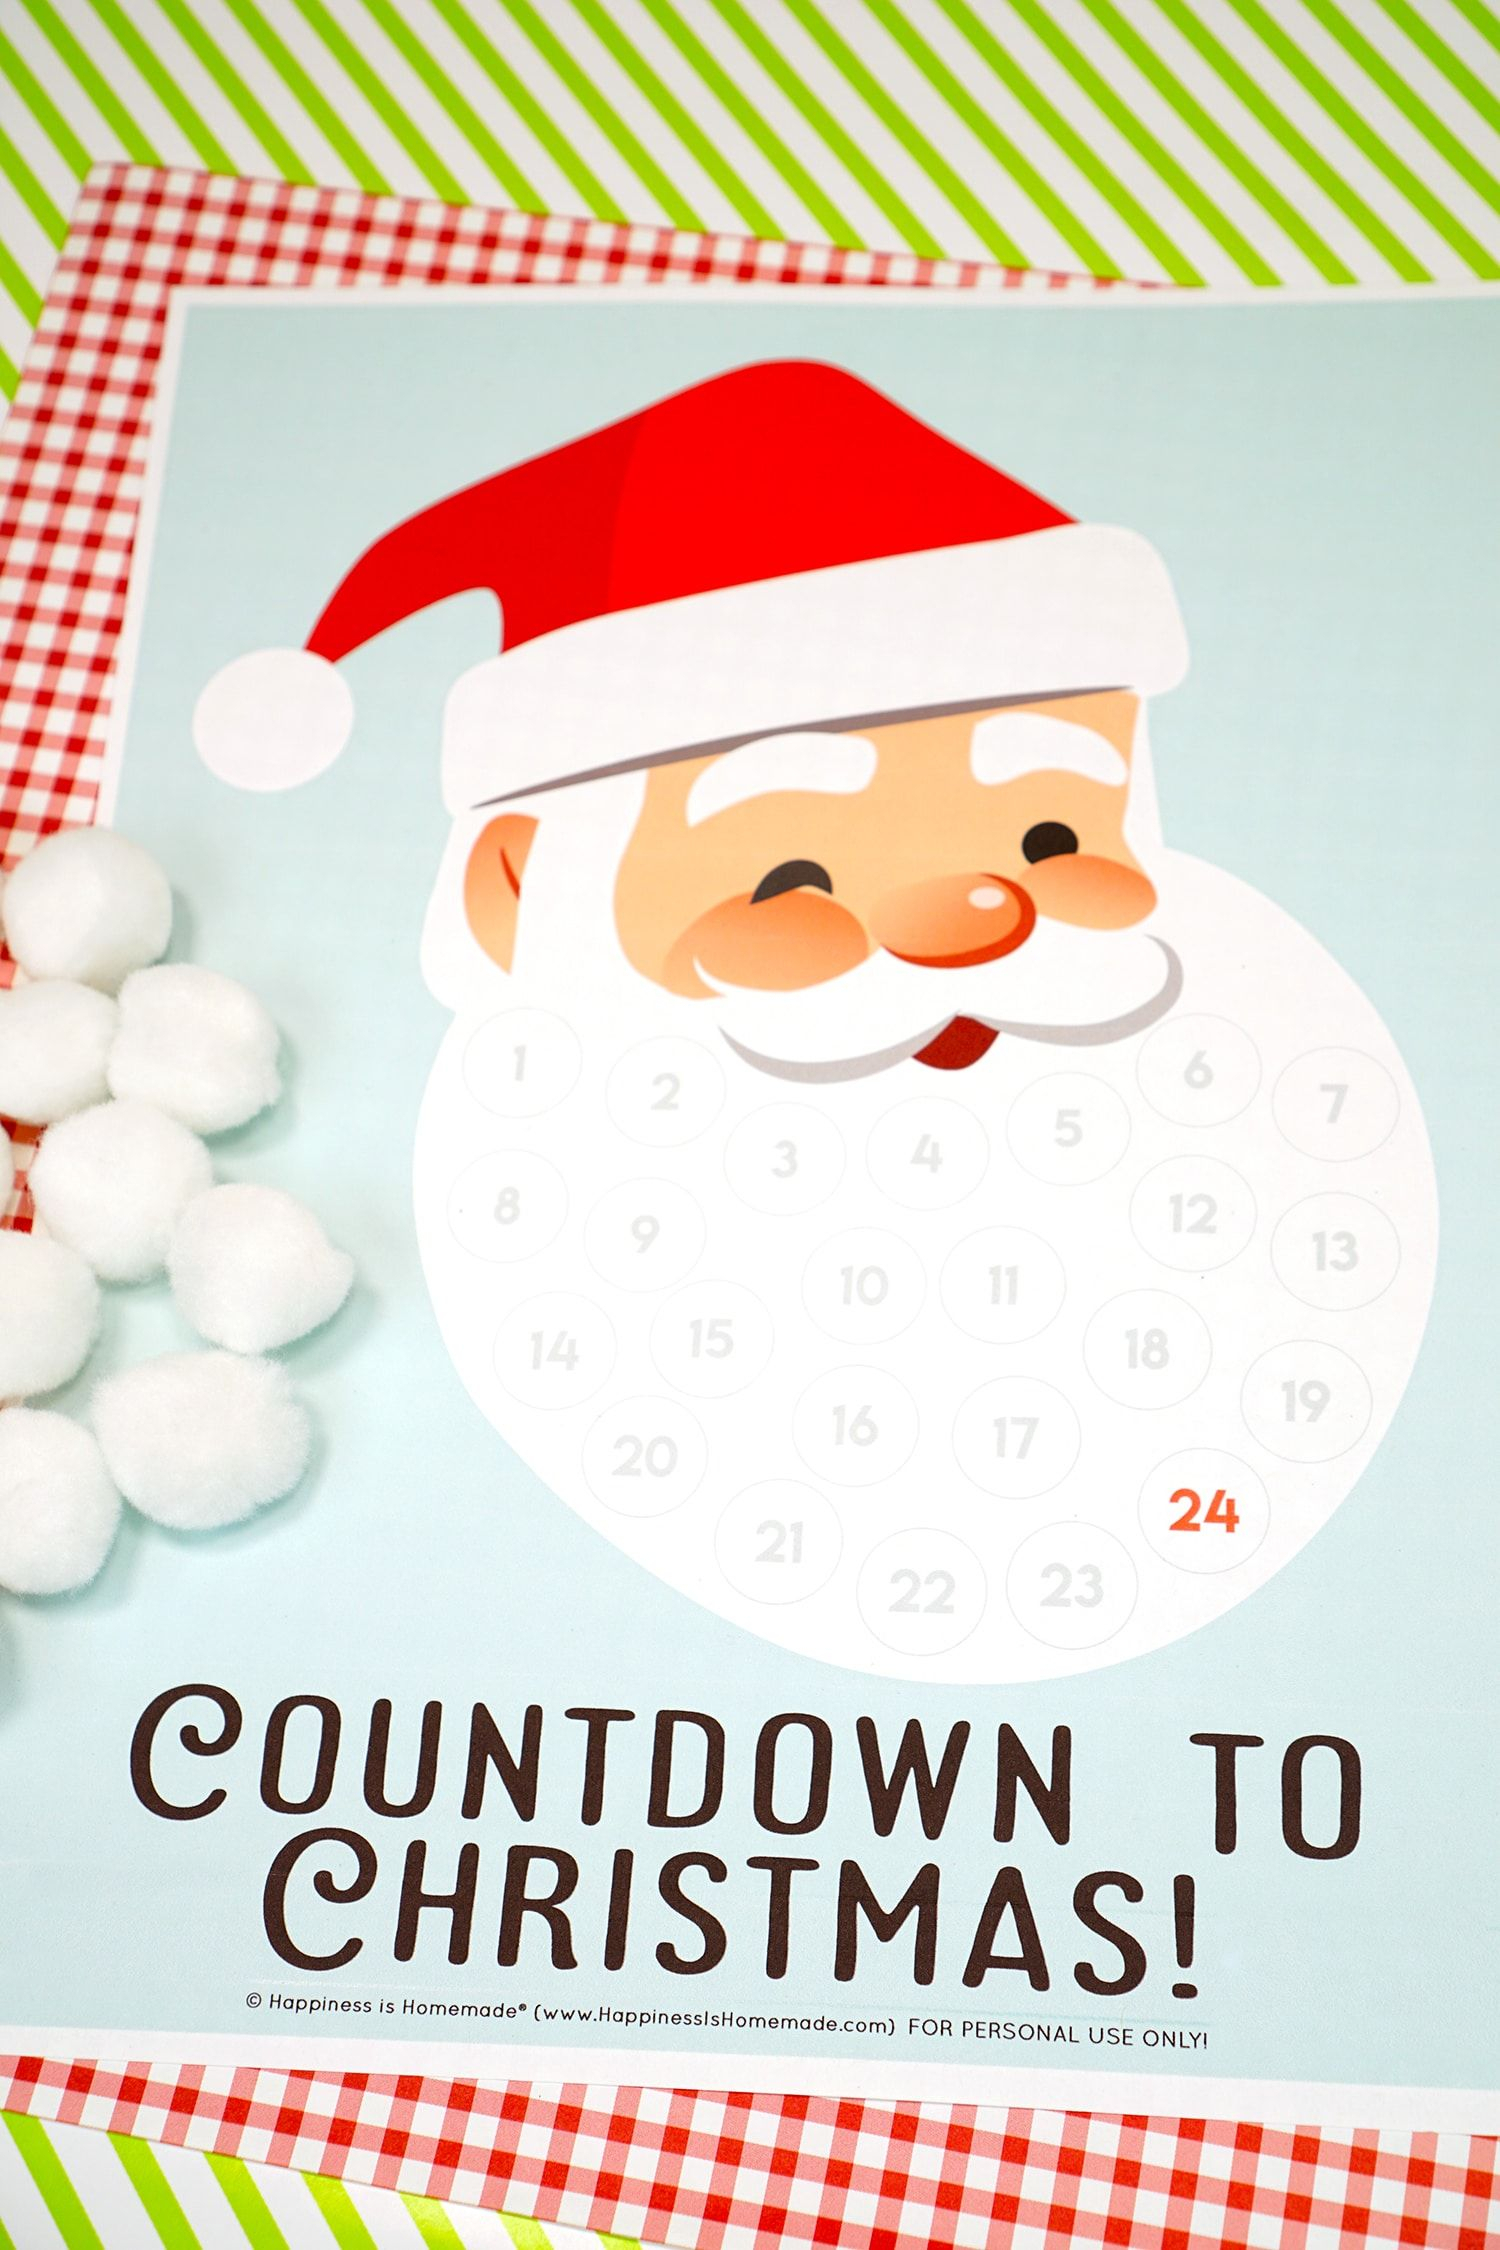 Printables Gallery In 2020 Christmas Countdown Calendar